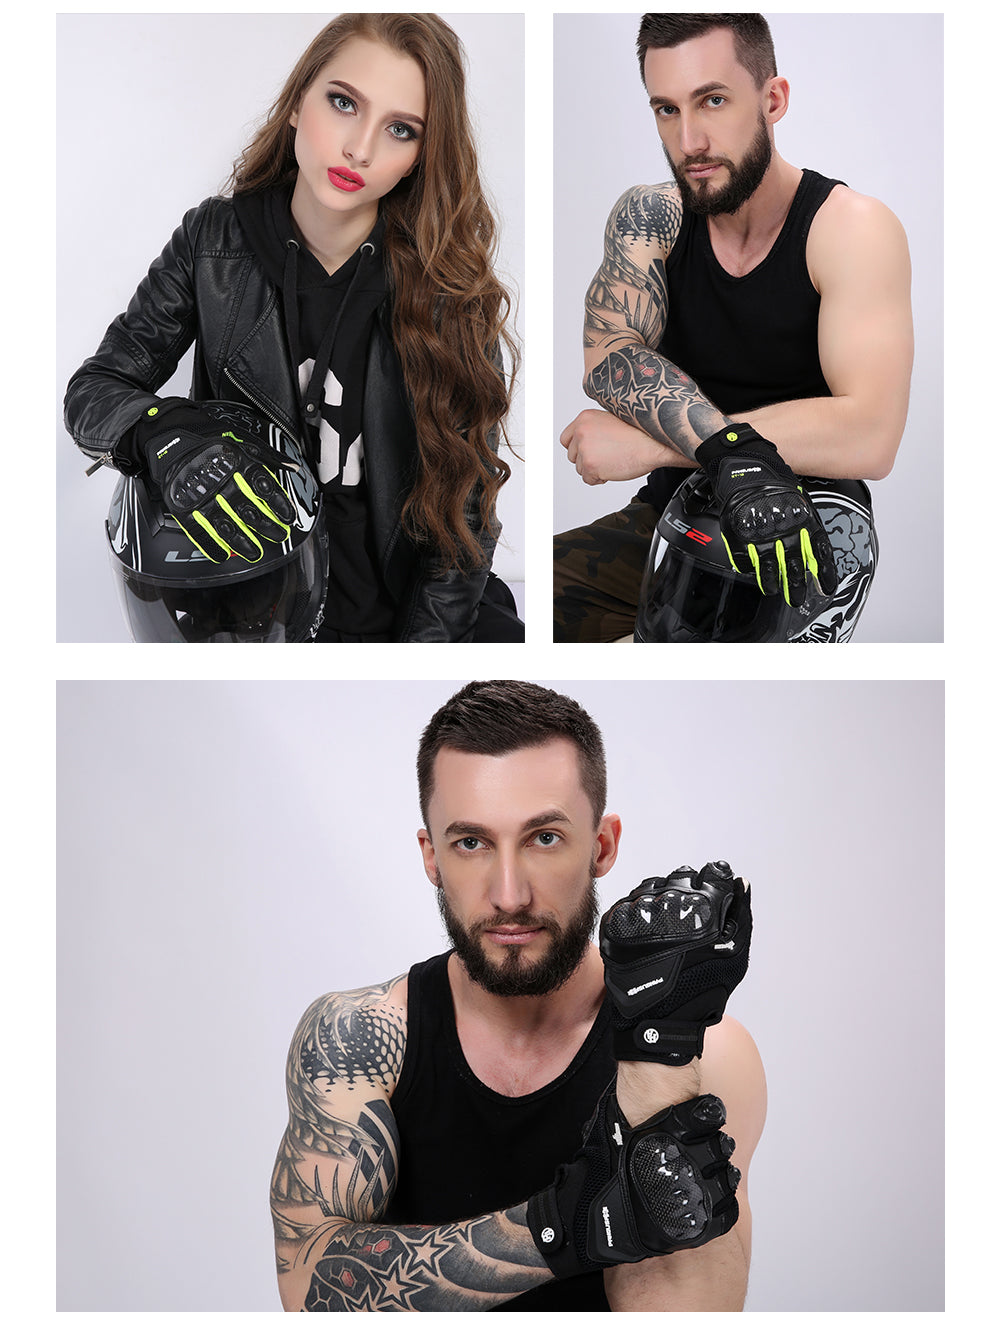 IRON JIA'S Summer Motorcycle Gloves Men Breathable Full Finger Carbon Fiber Protection Motocross Moto Motorbike Riding Gloves